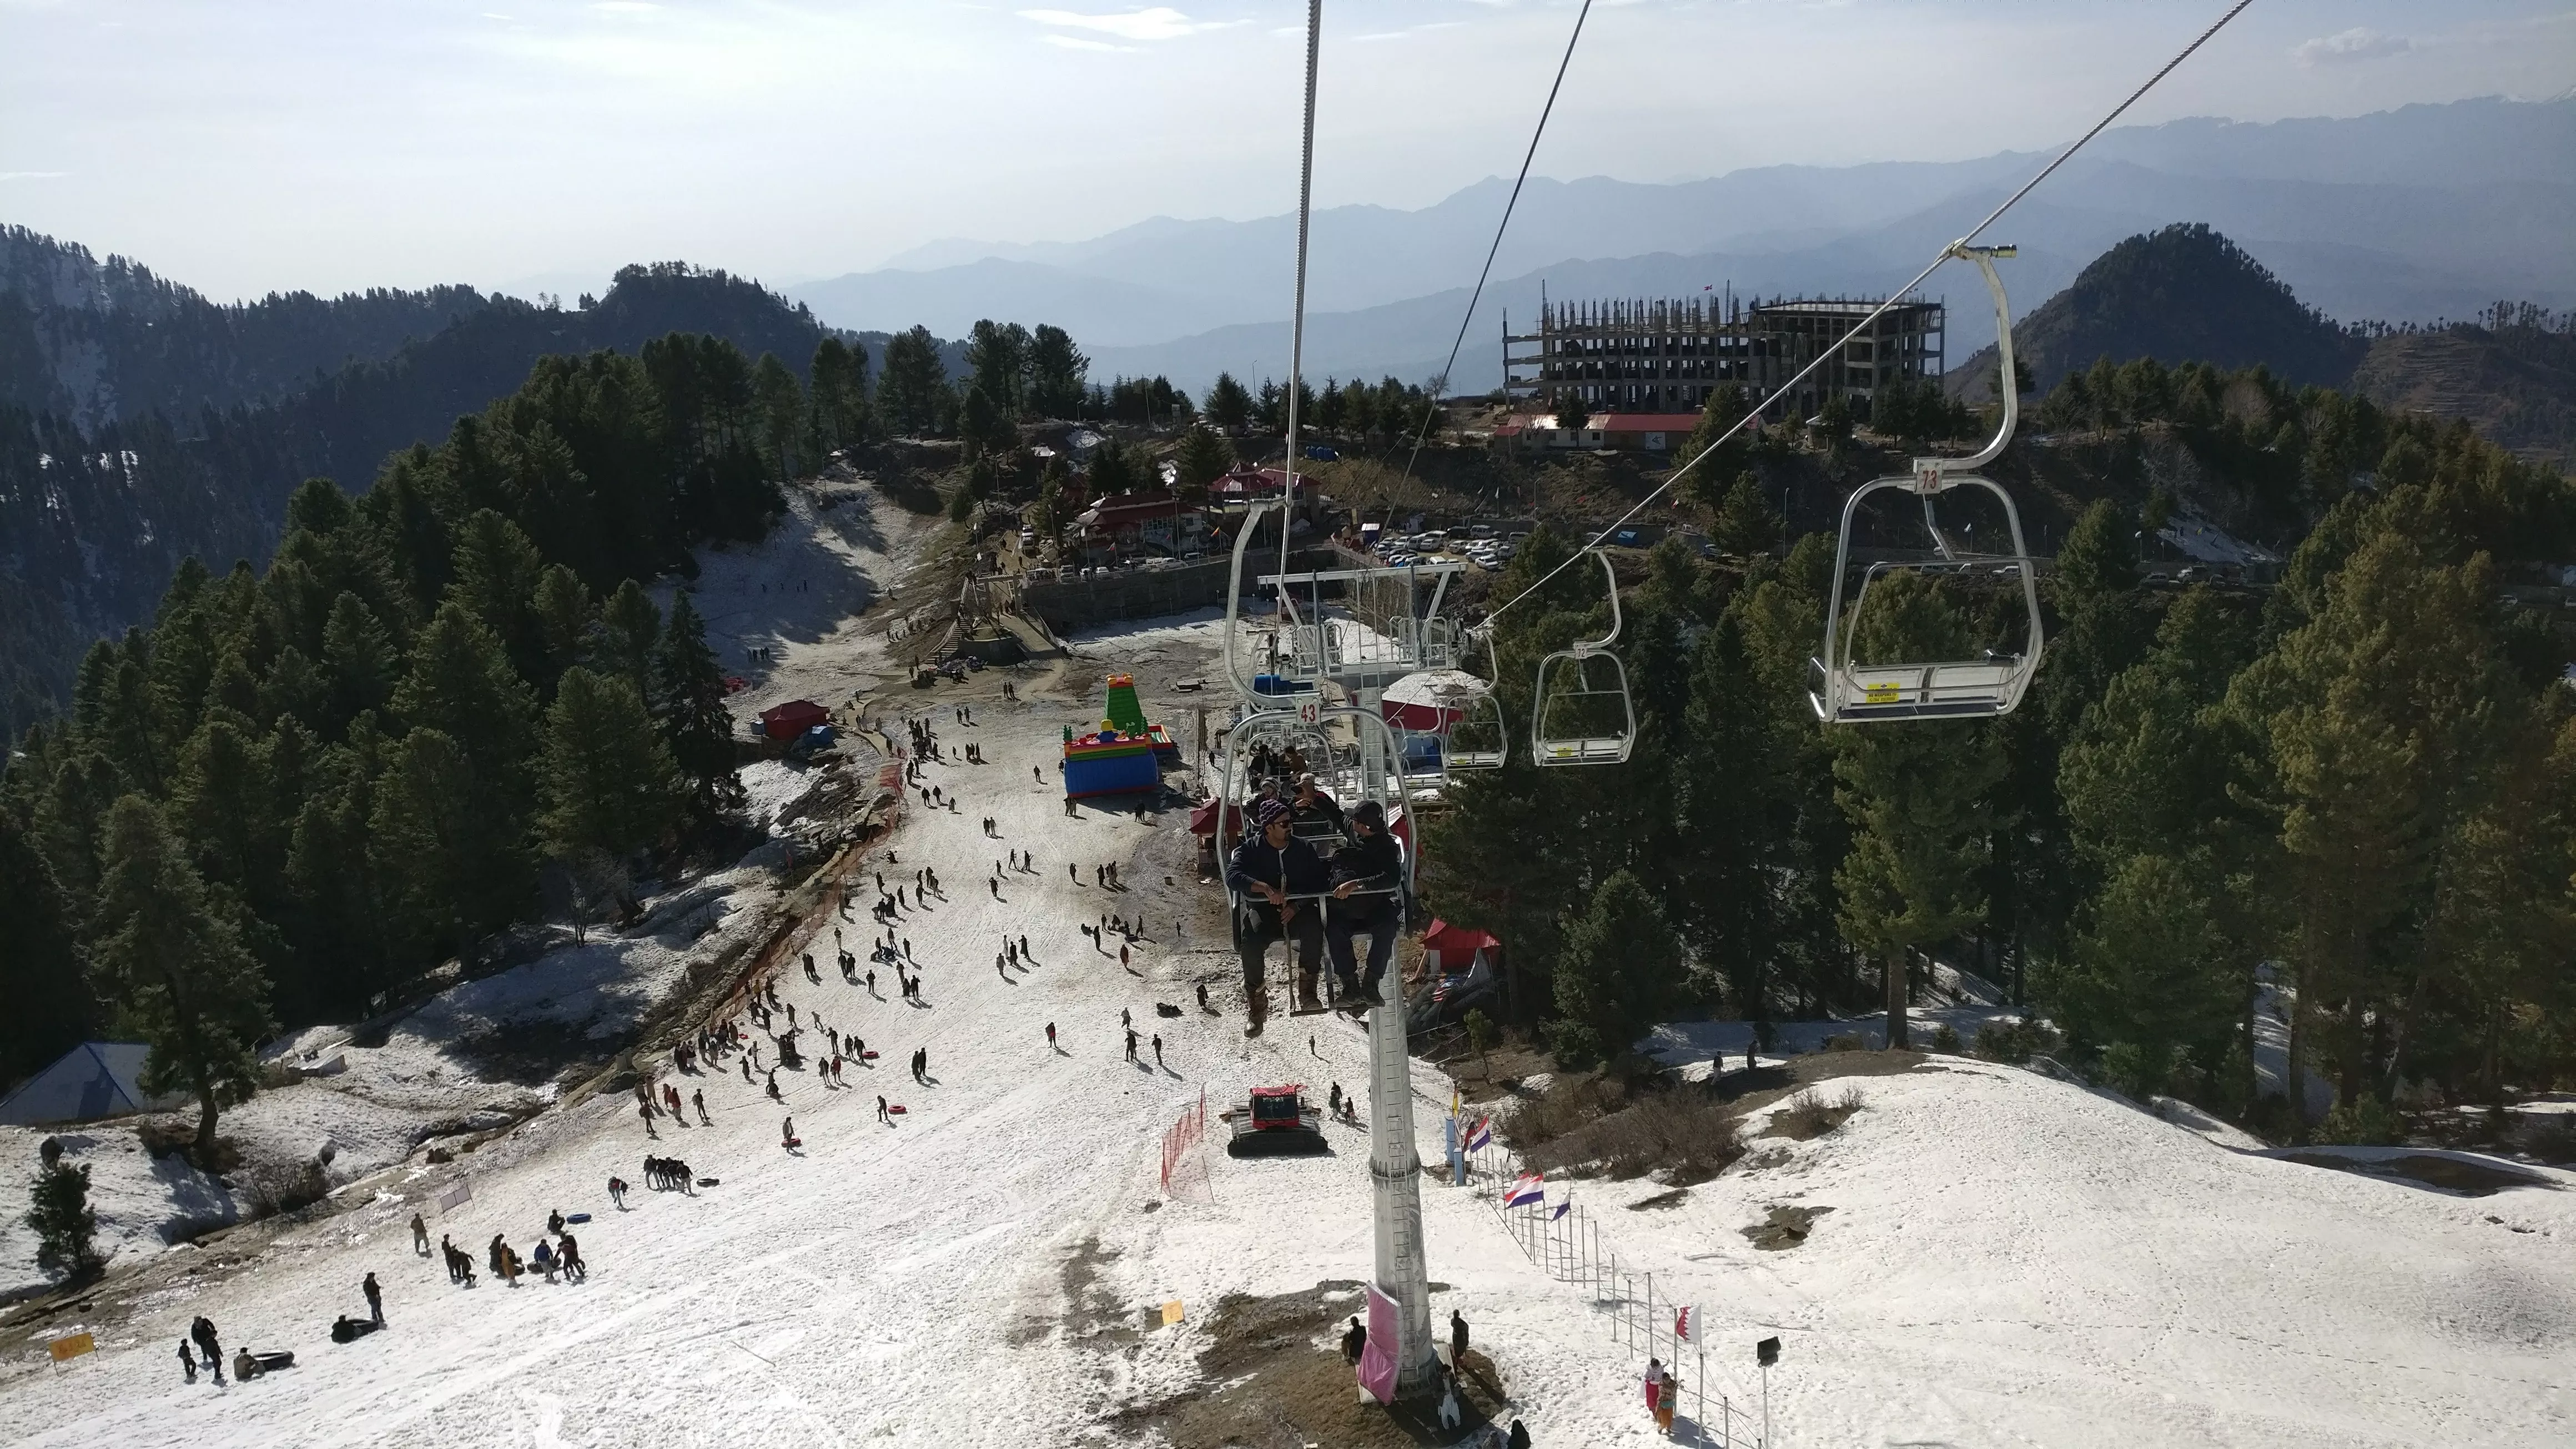 Malam Jabba Ski Resort in Pakistan, South Asia | Mountaineering,Skiing - Rated 3.7